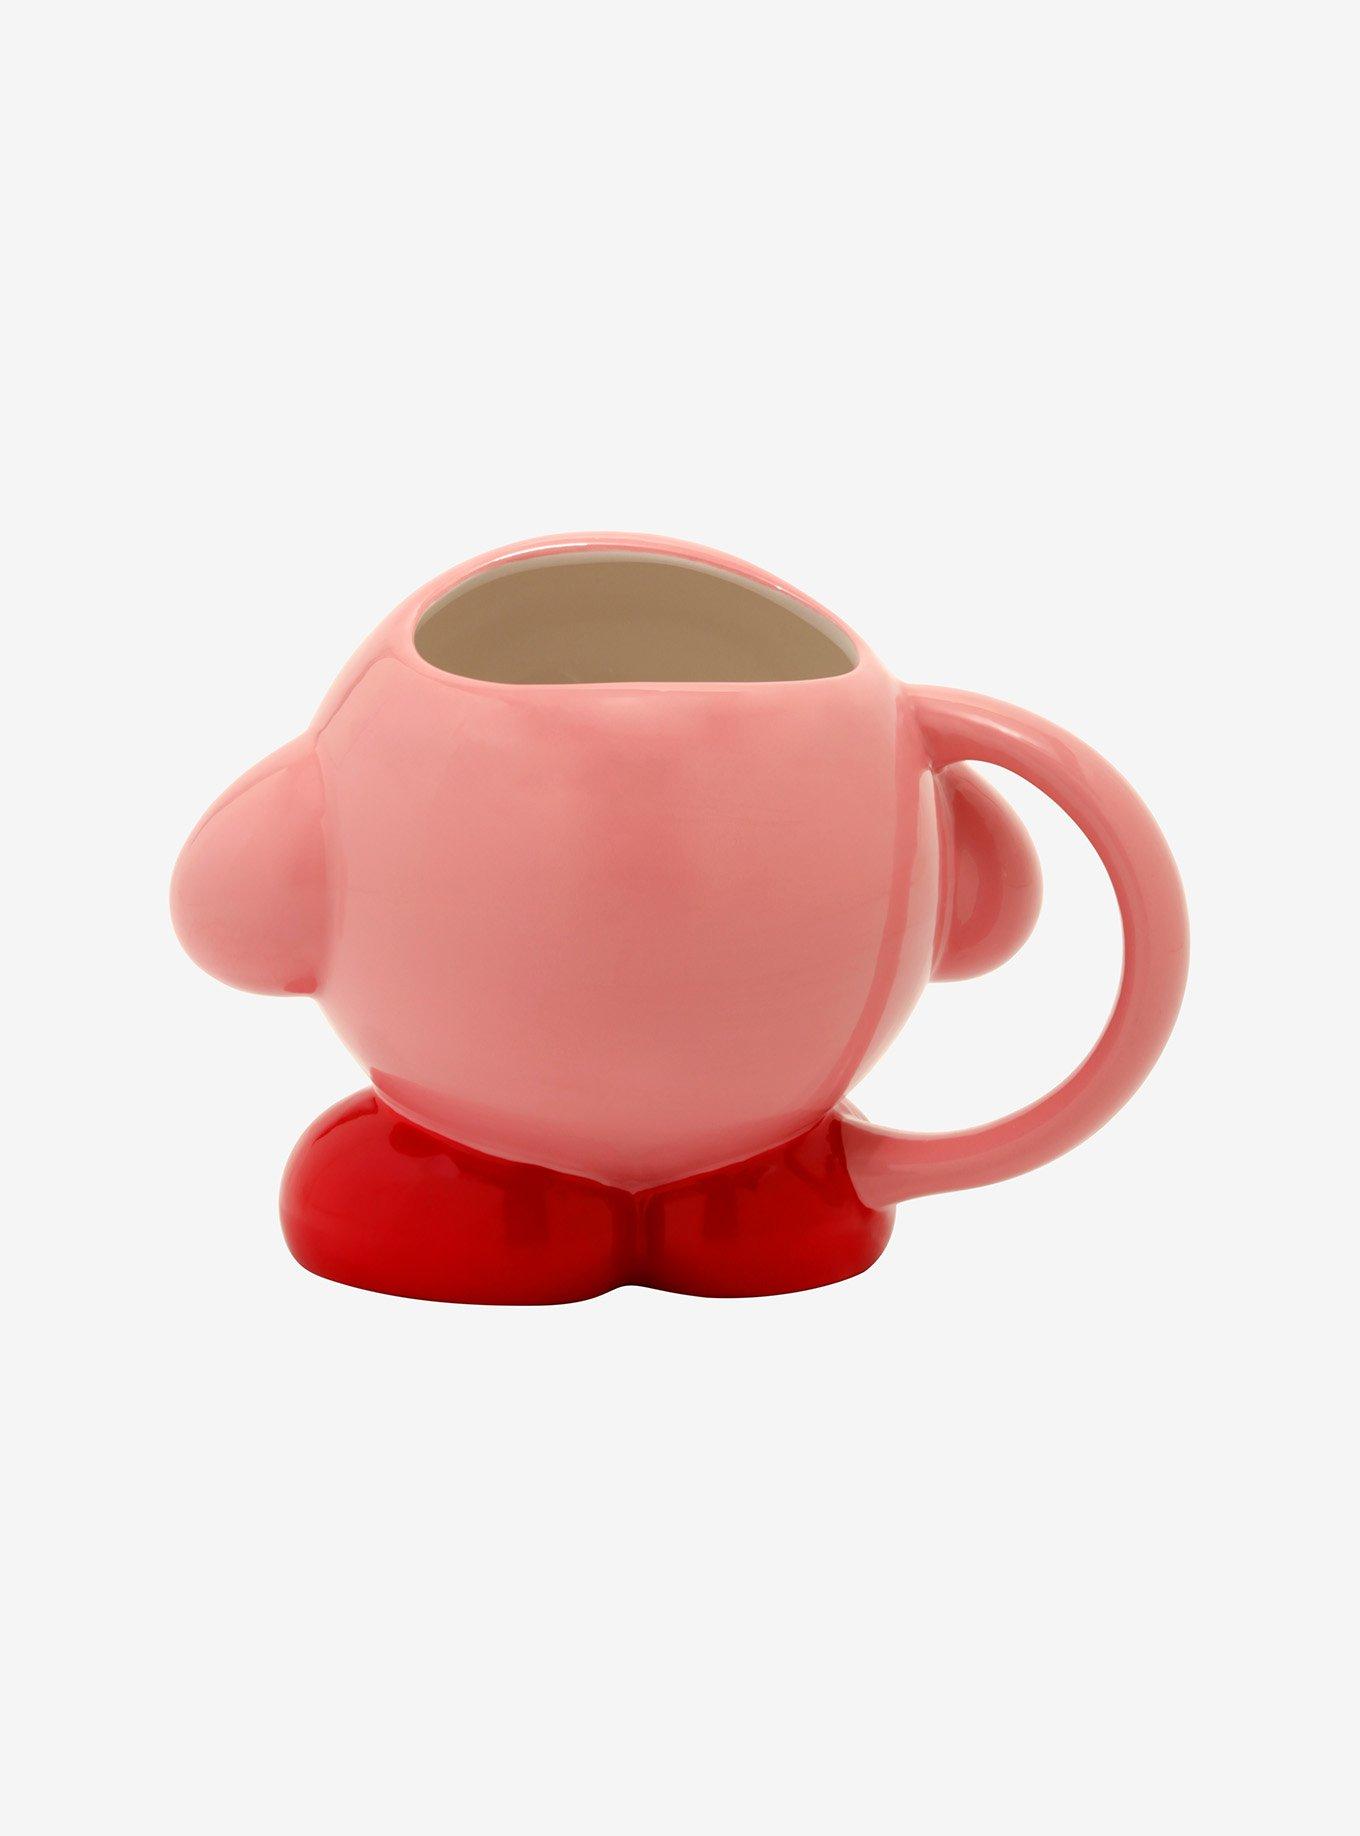 Kirby Figural Mug, , alternate